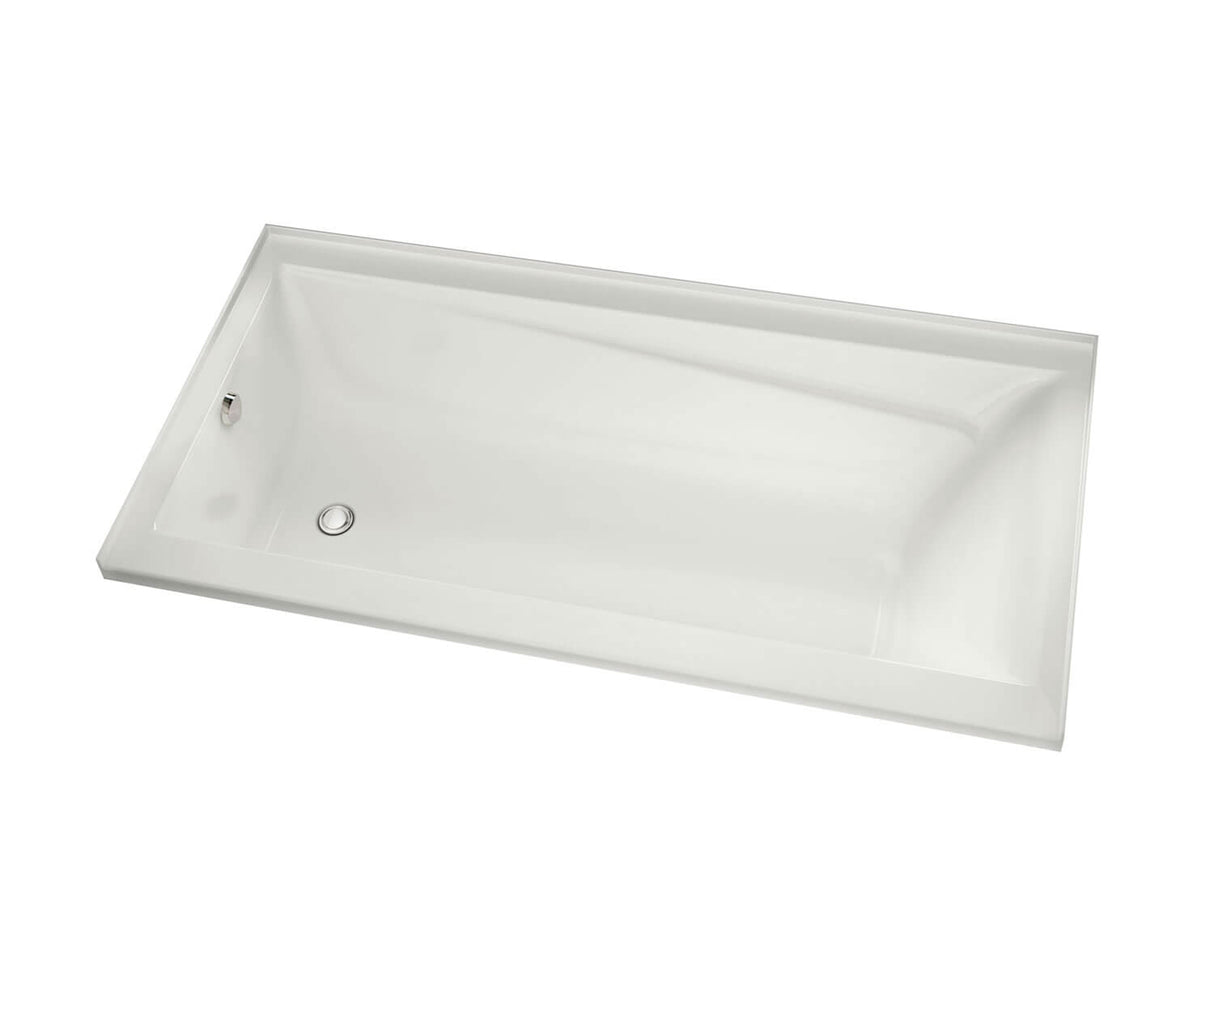 MAAX 106224-003-001-101 Exhibit 7232 IF Acrylic Alcove Right-Hand Drain Whirlpool Bathtub in White